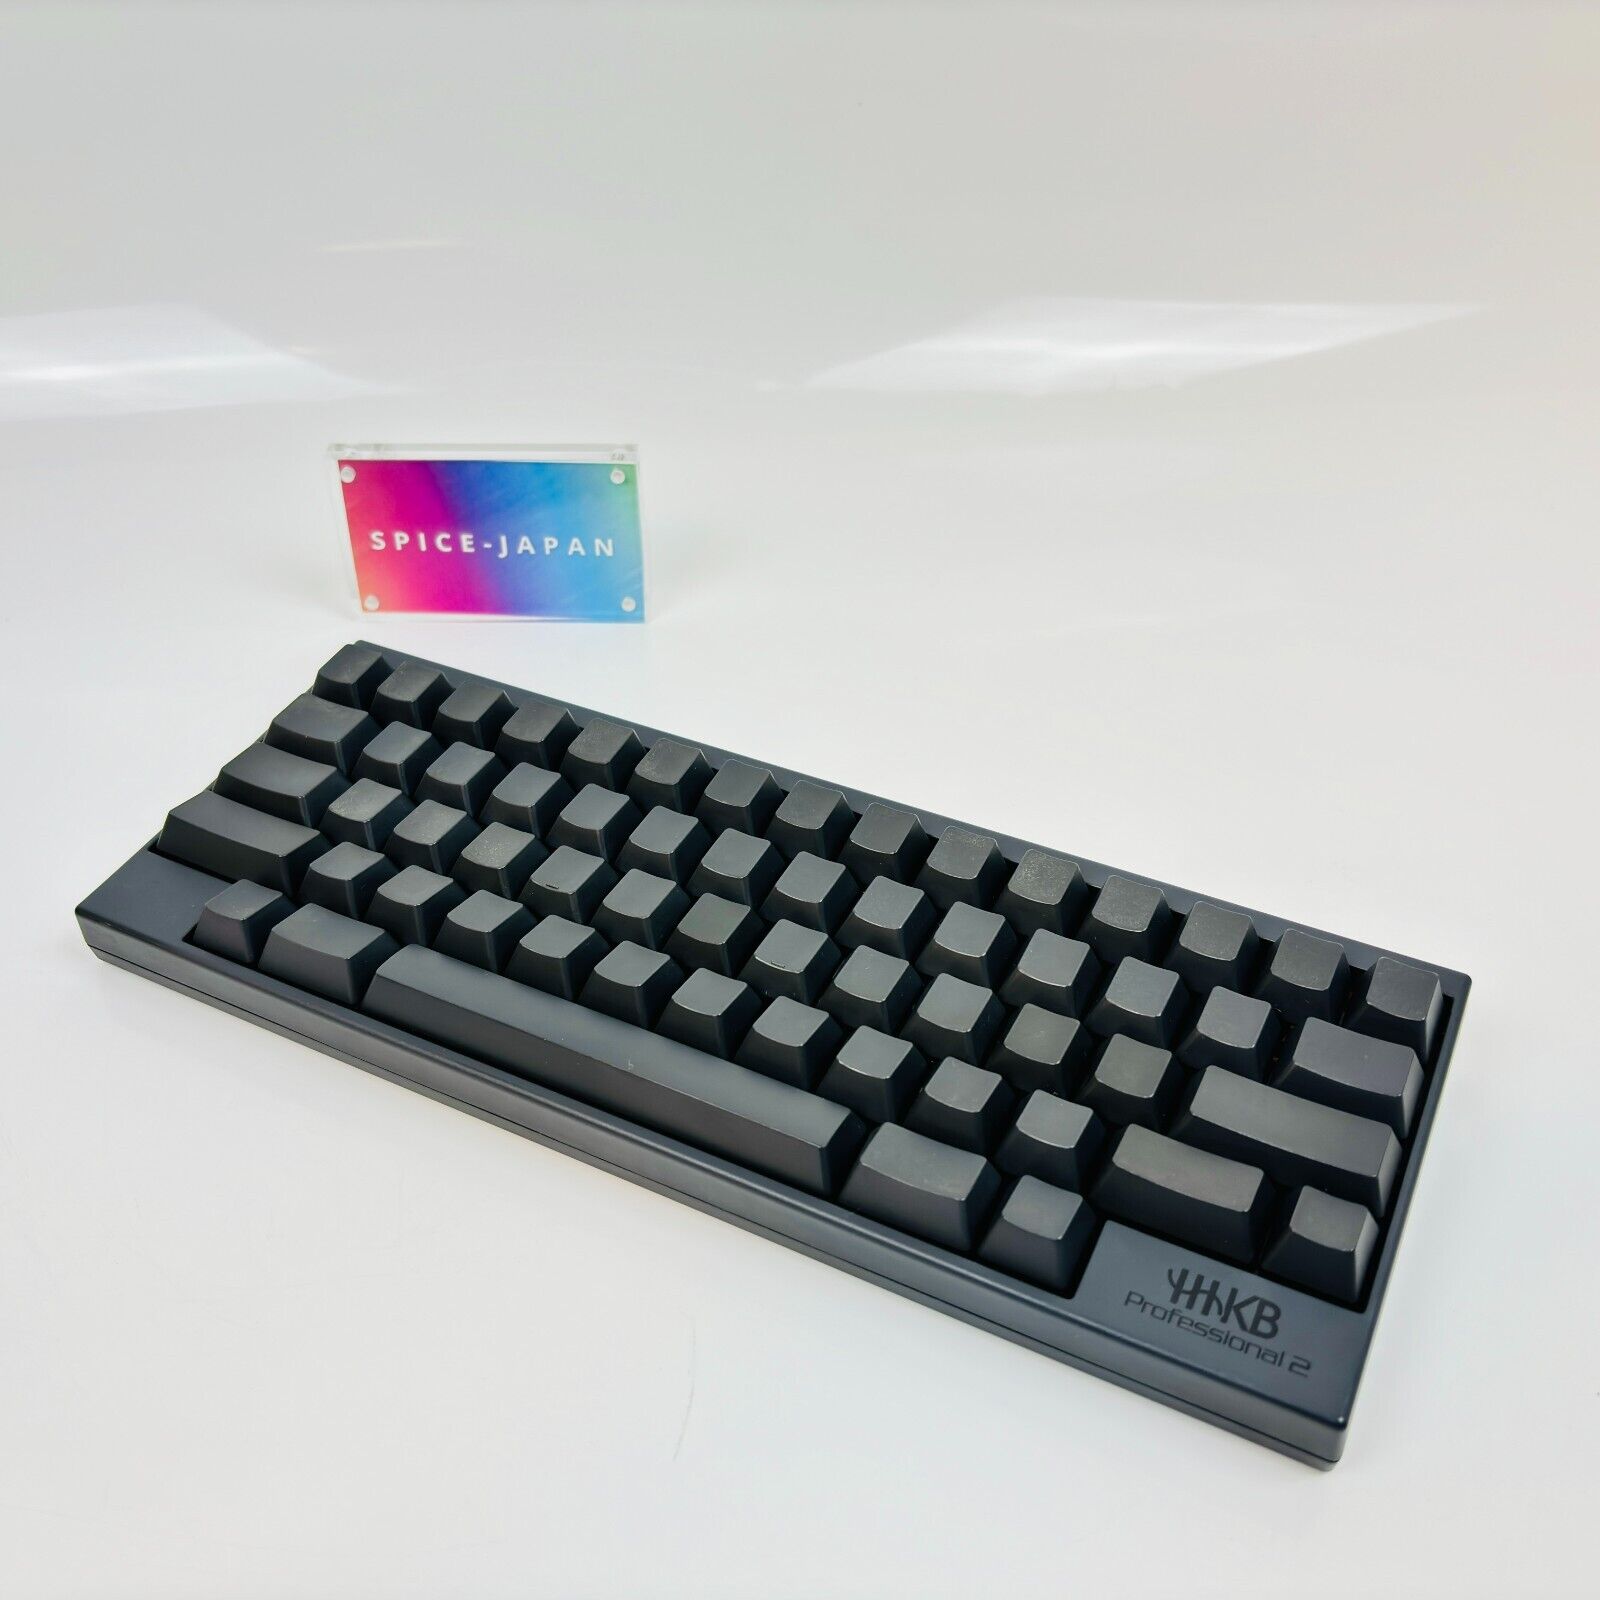 PD-KB400BN Keyboard PFU HHKB Professional2 English Layout Black Japan Ergonomic